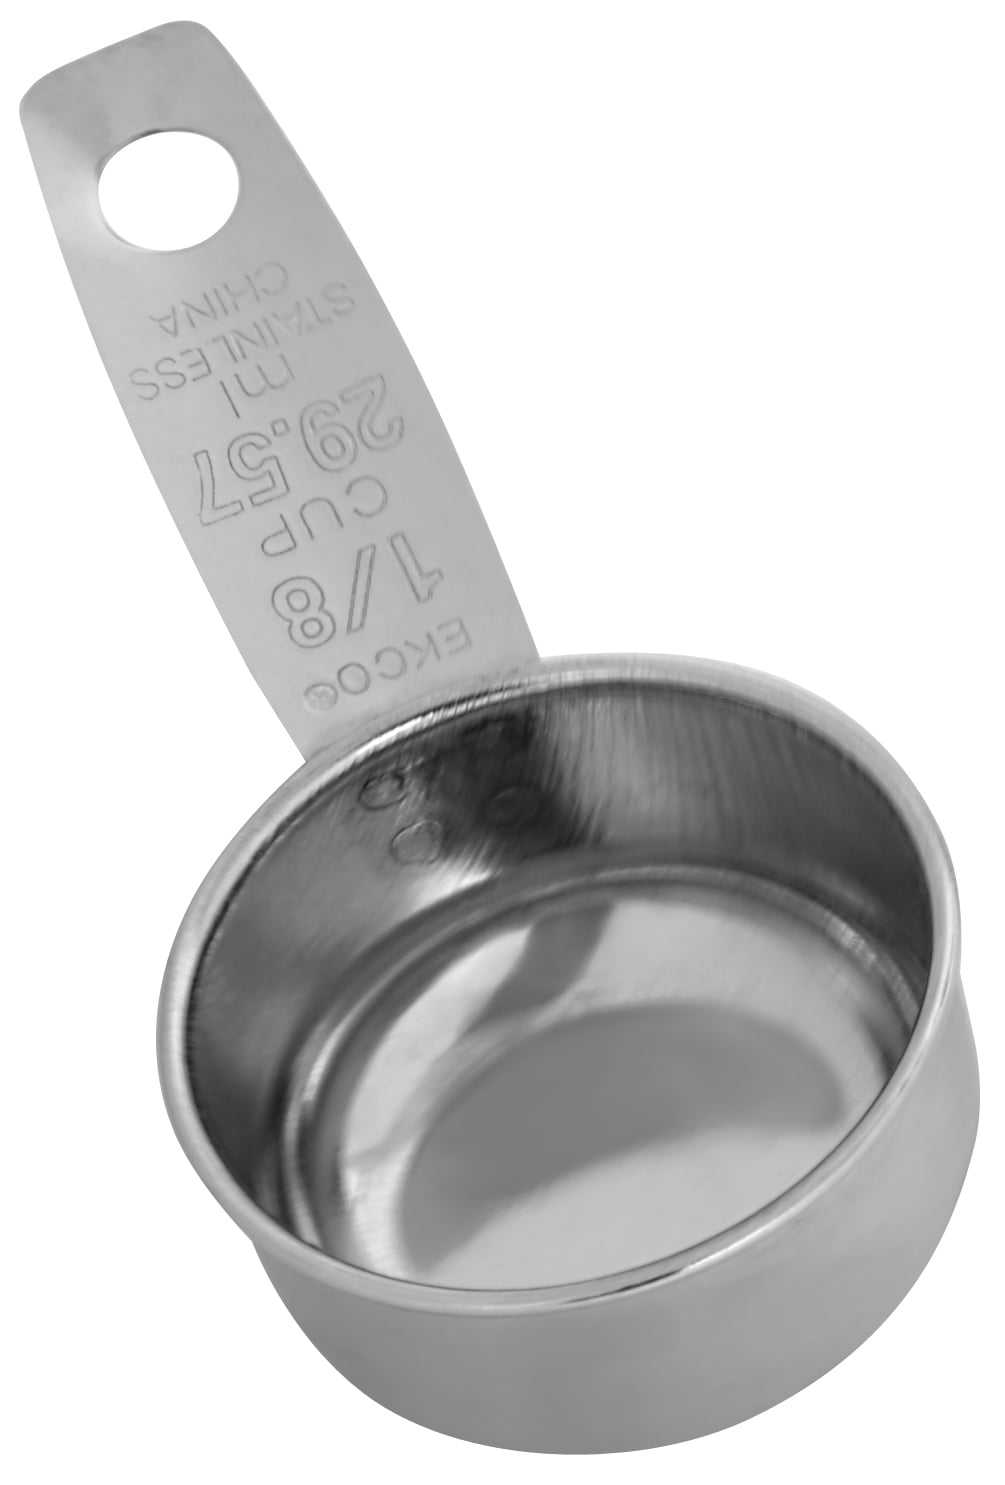 Micro Scoop 10pc S 1 Gram PP Static-Free Smidgen Measuring Spoons Tiny Scoop for Cosmetics, Medicines, Powders and Natural Sweeteners